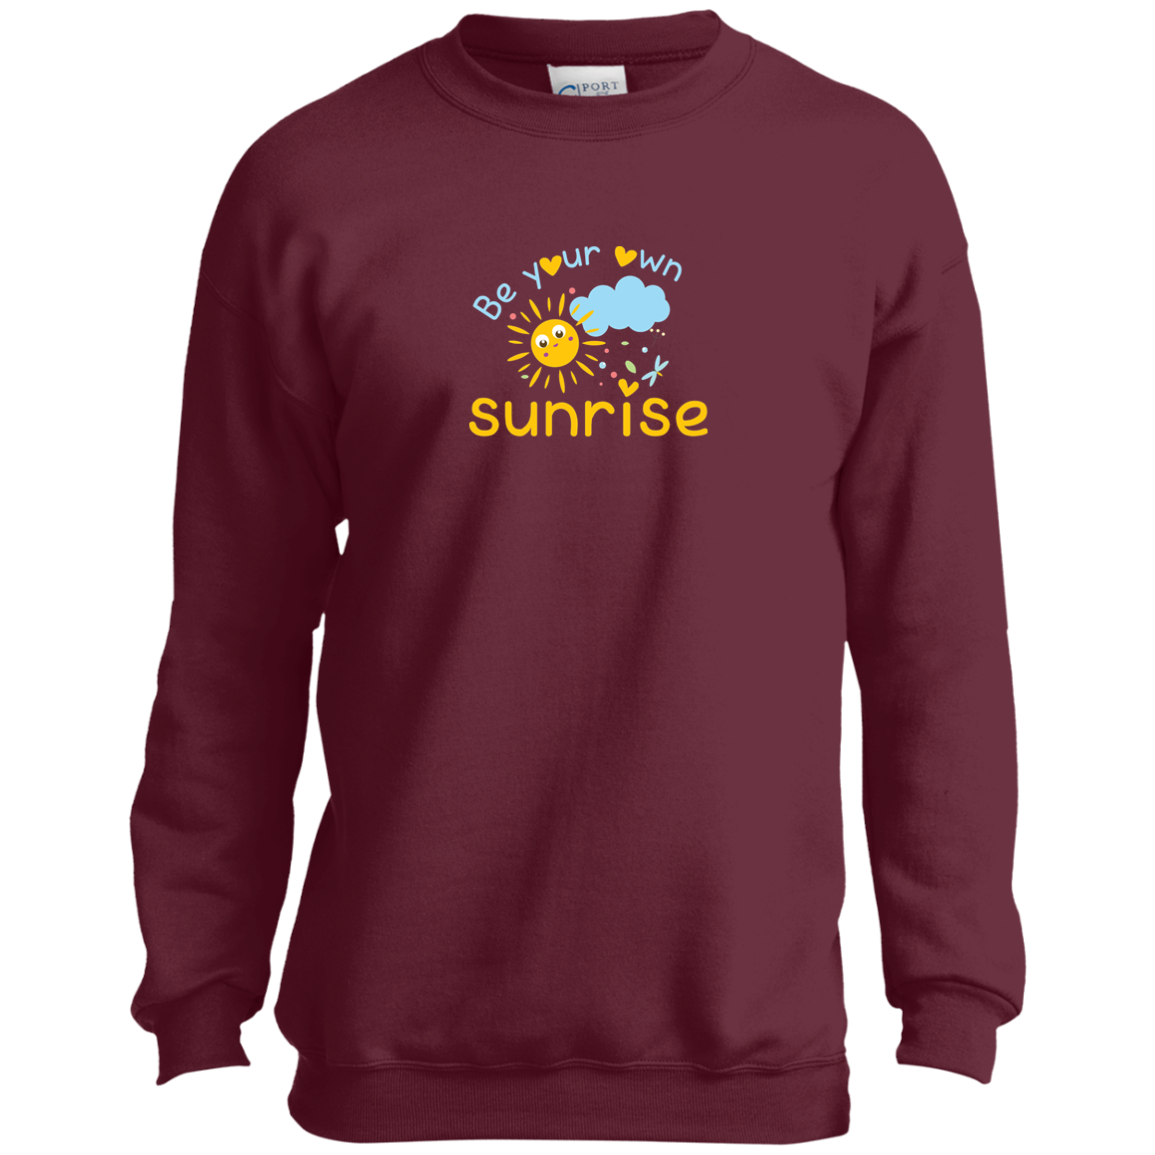 Be Your Own Sunrise - PC90Y Youth Crewneck Sweatshirt